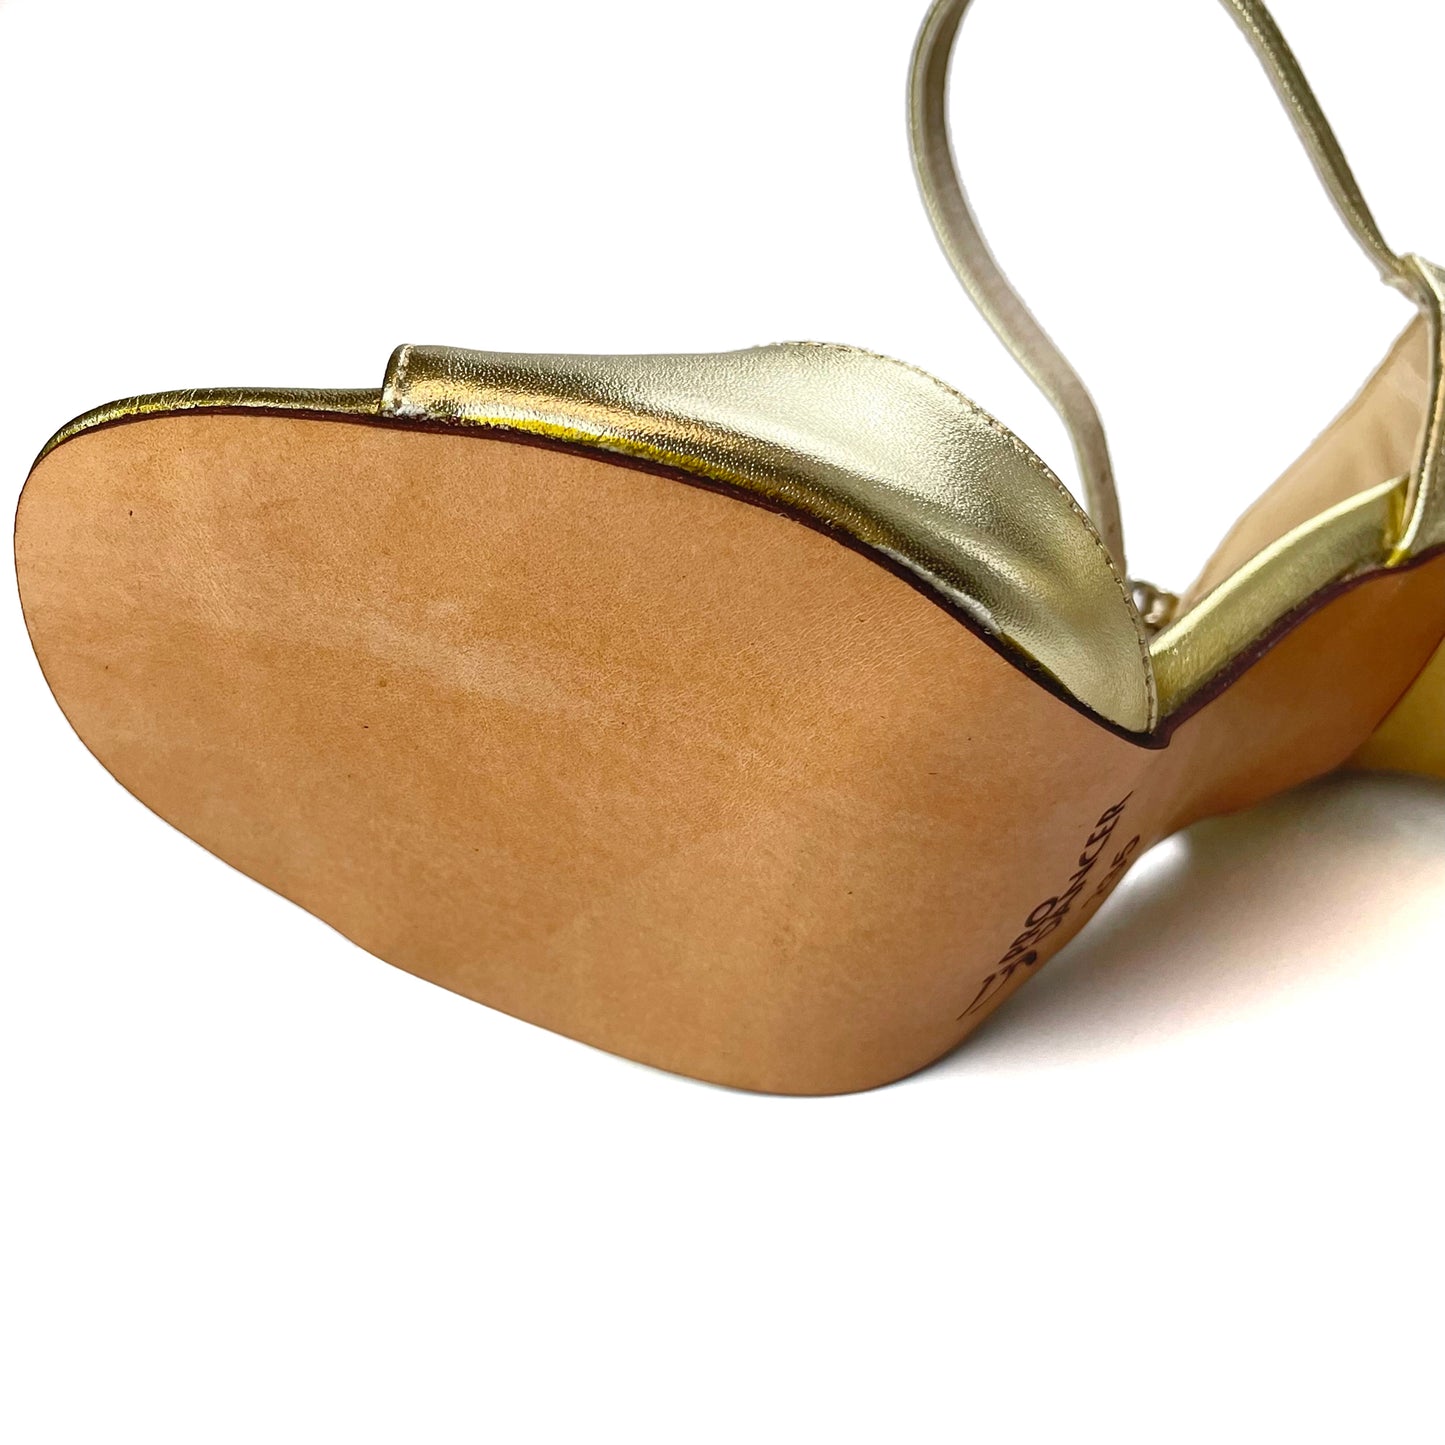 Pro Dancer Argentine Tango Shoes Women High Heel Dance Sandals Leather Sole Gold (PD-9001H)